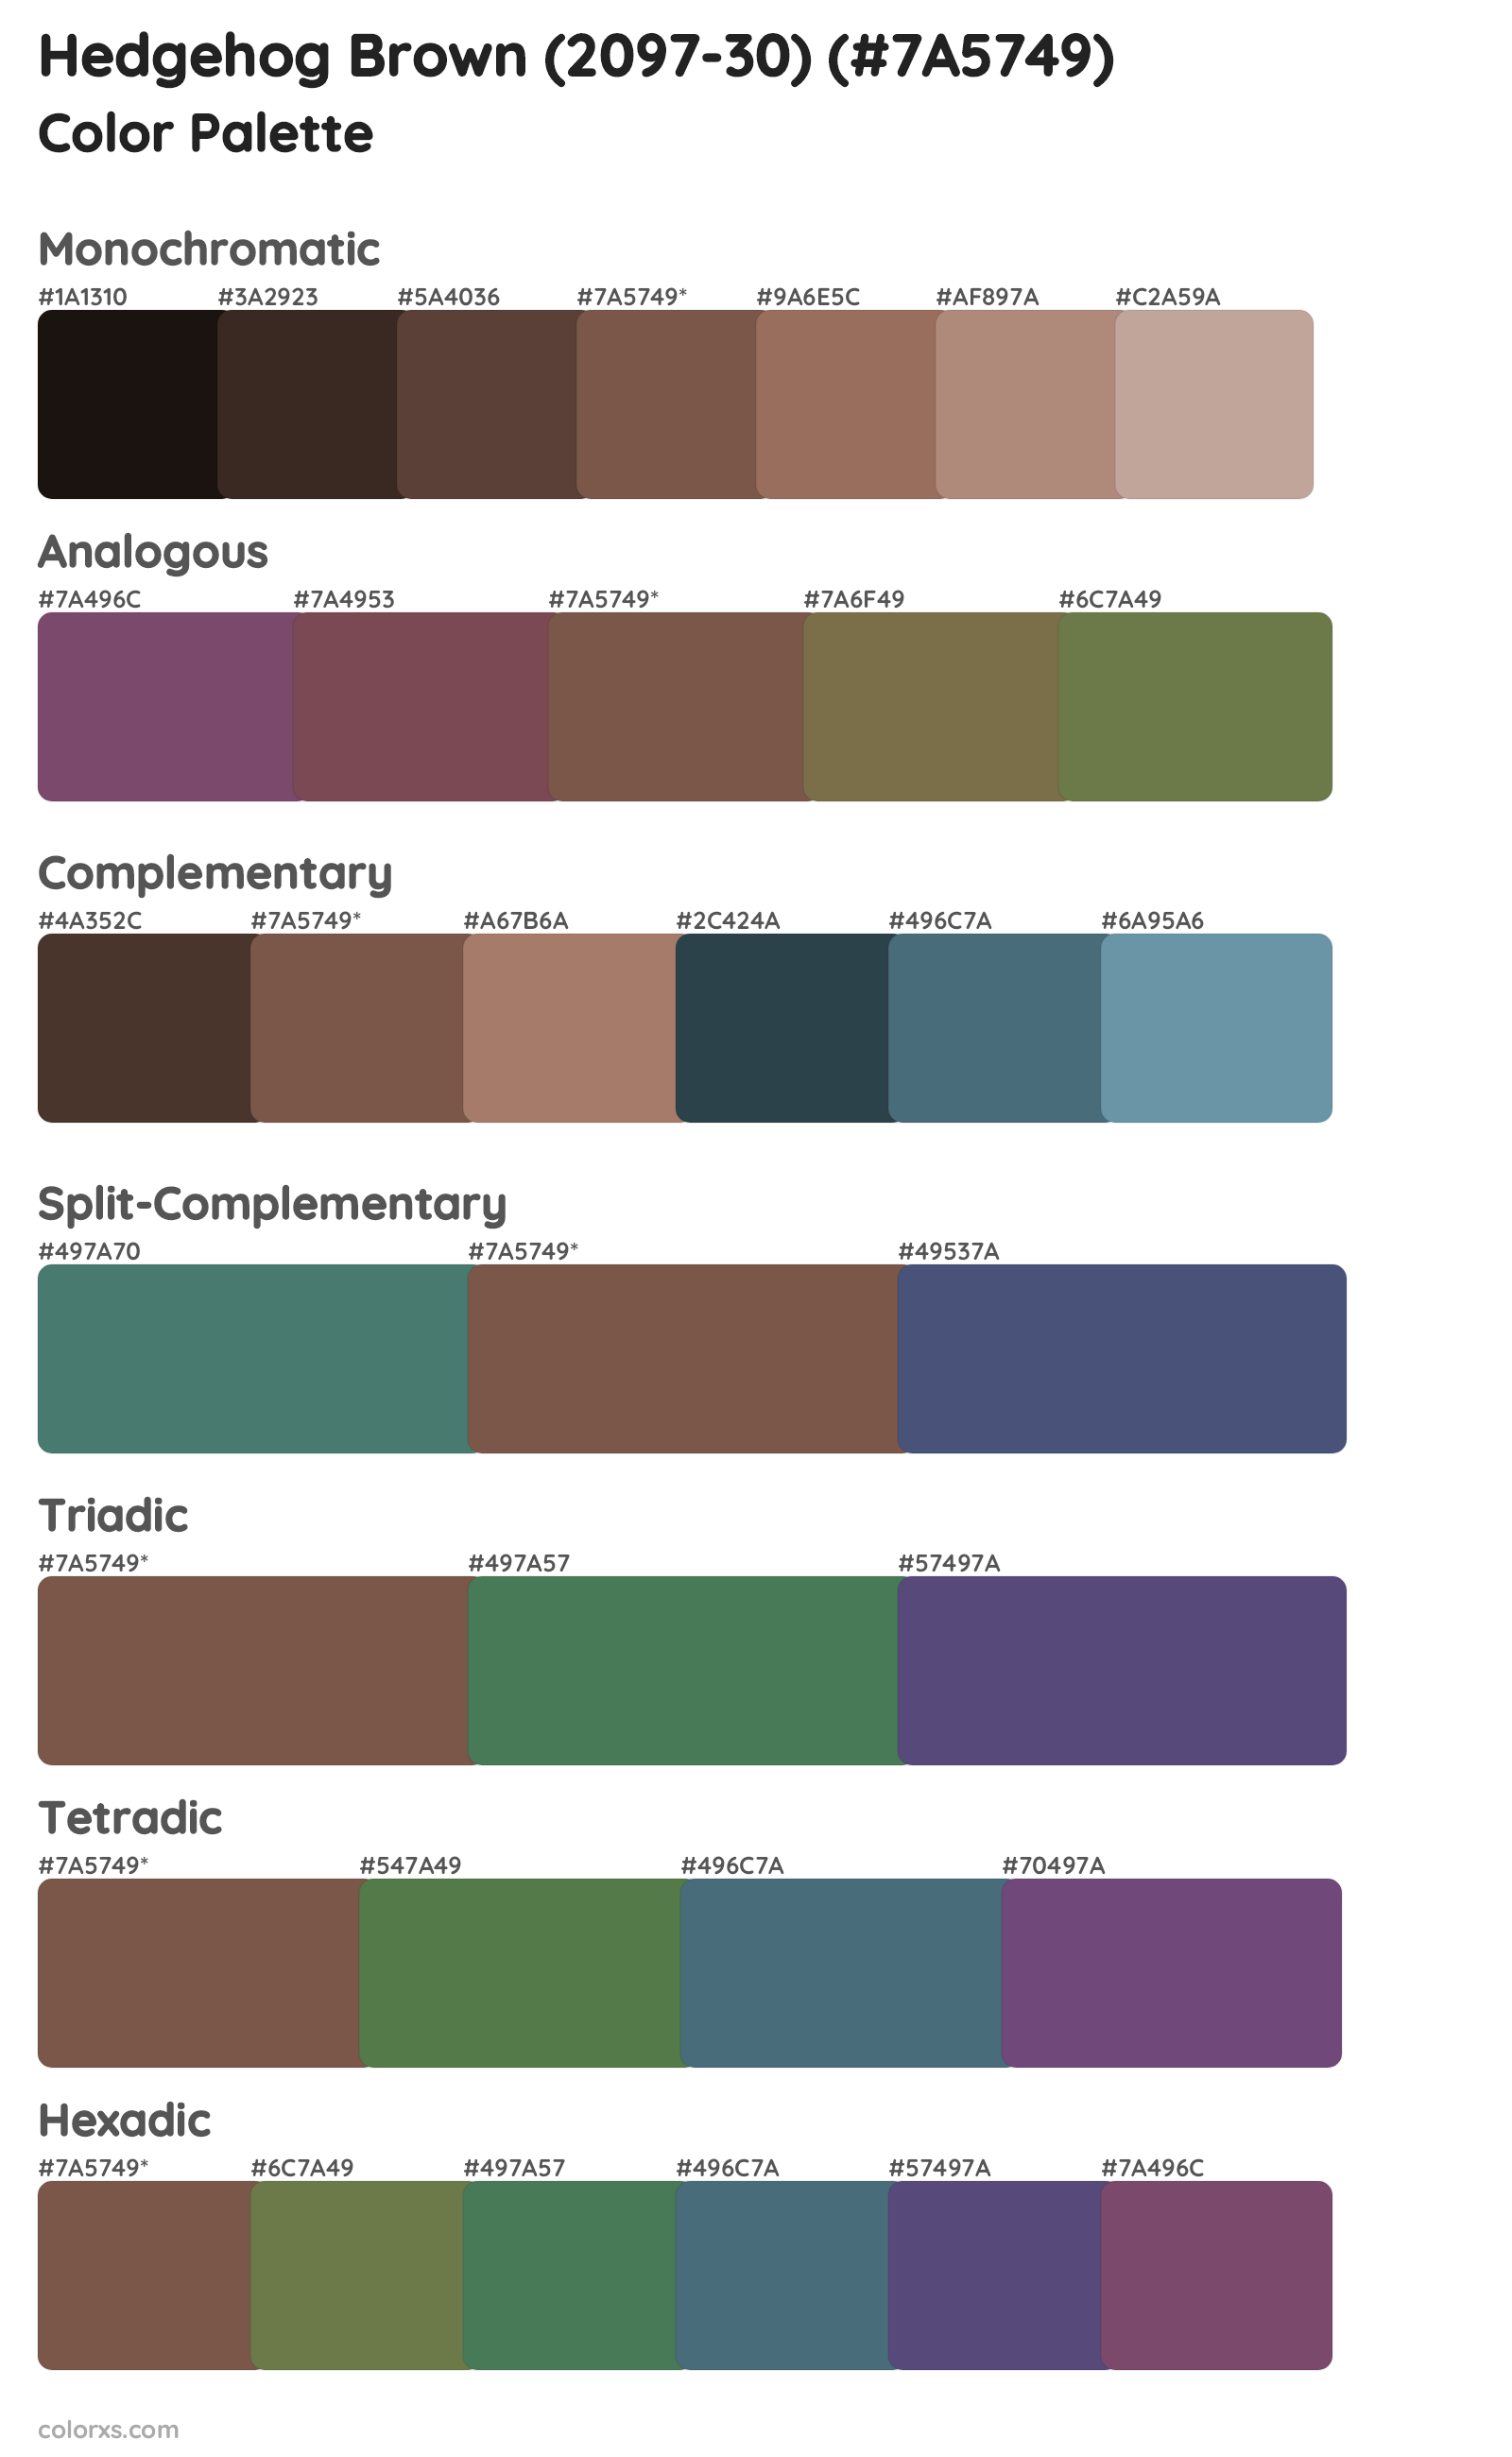 Hedgehog Brown (2097-30) Color Scheme Palettes